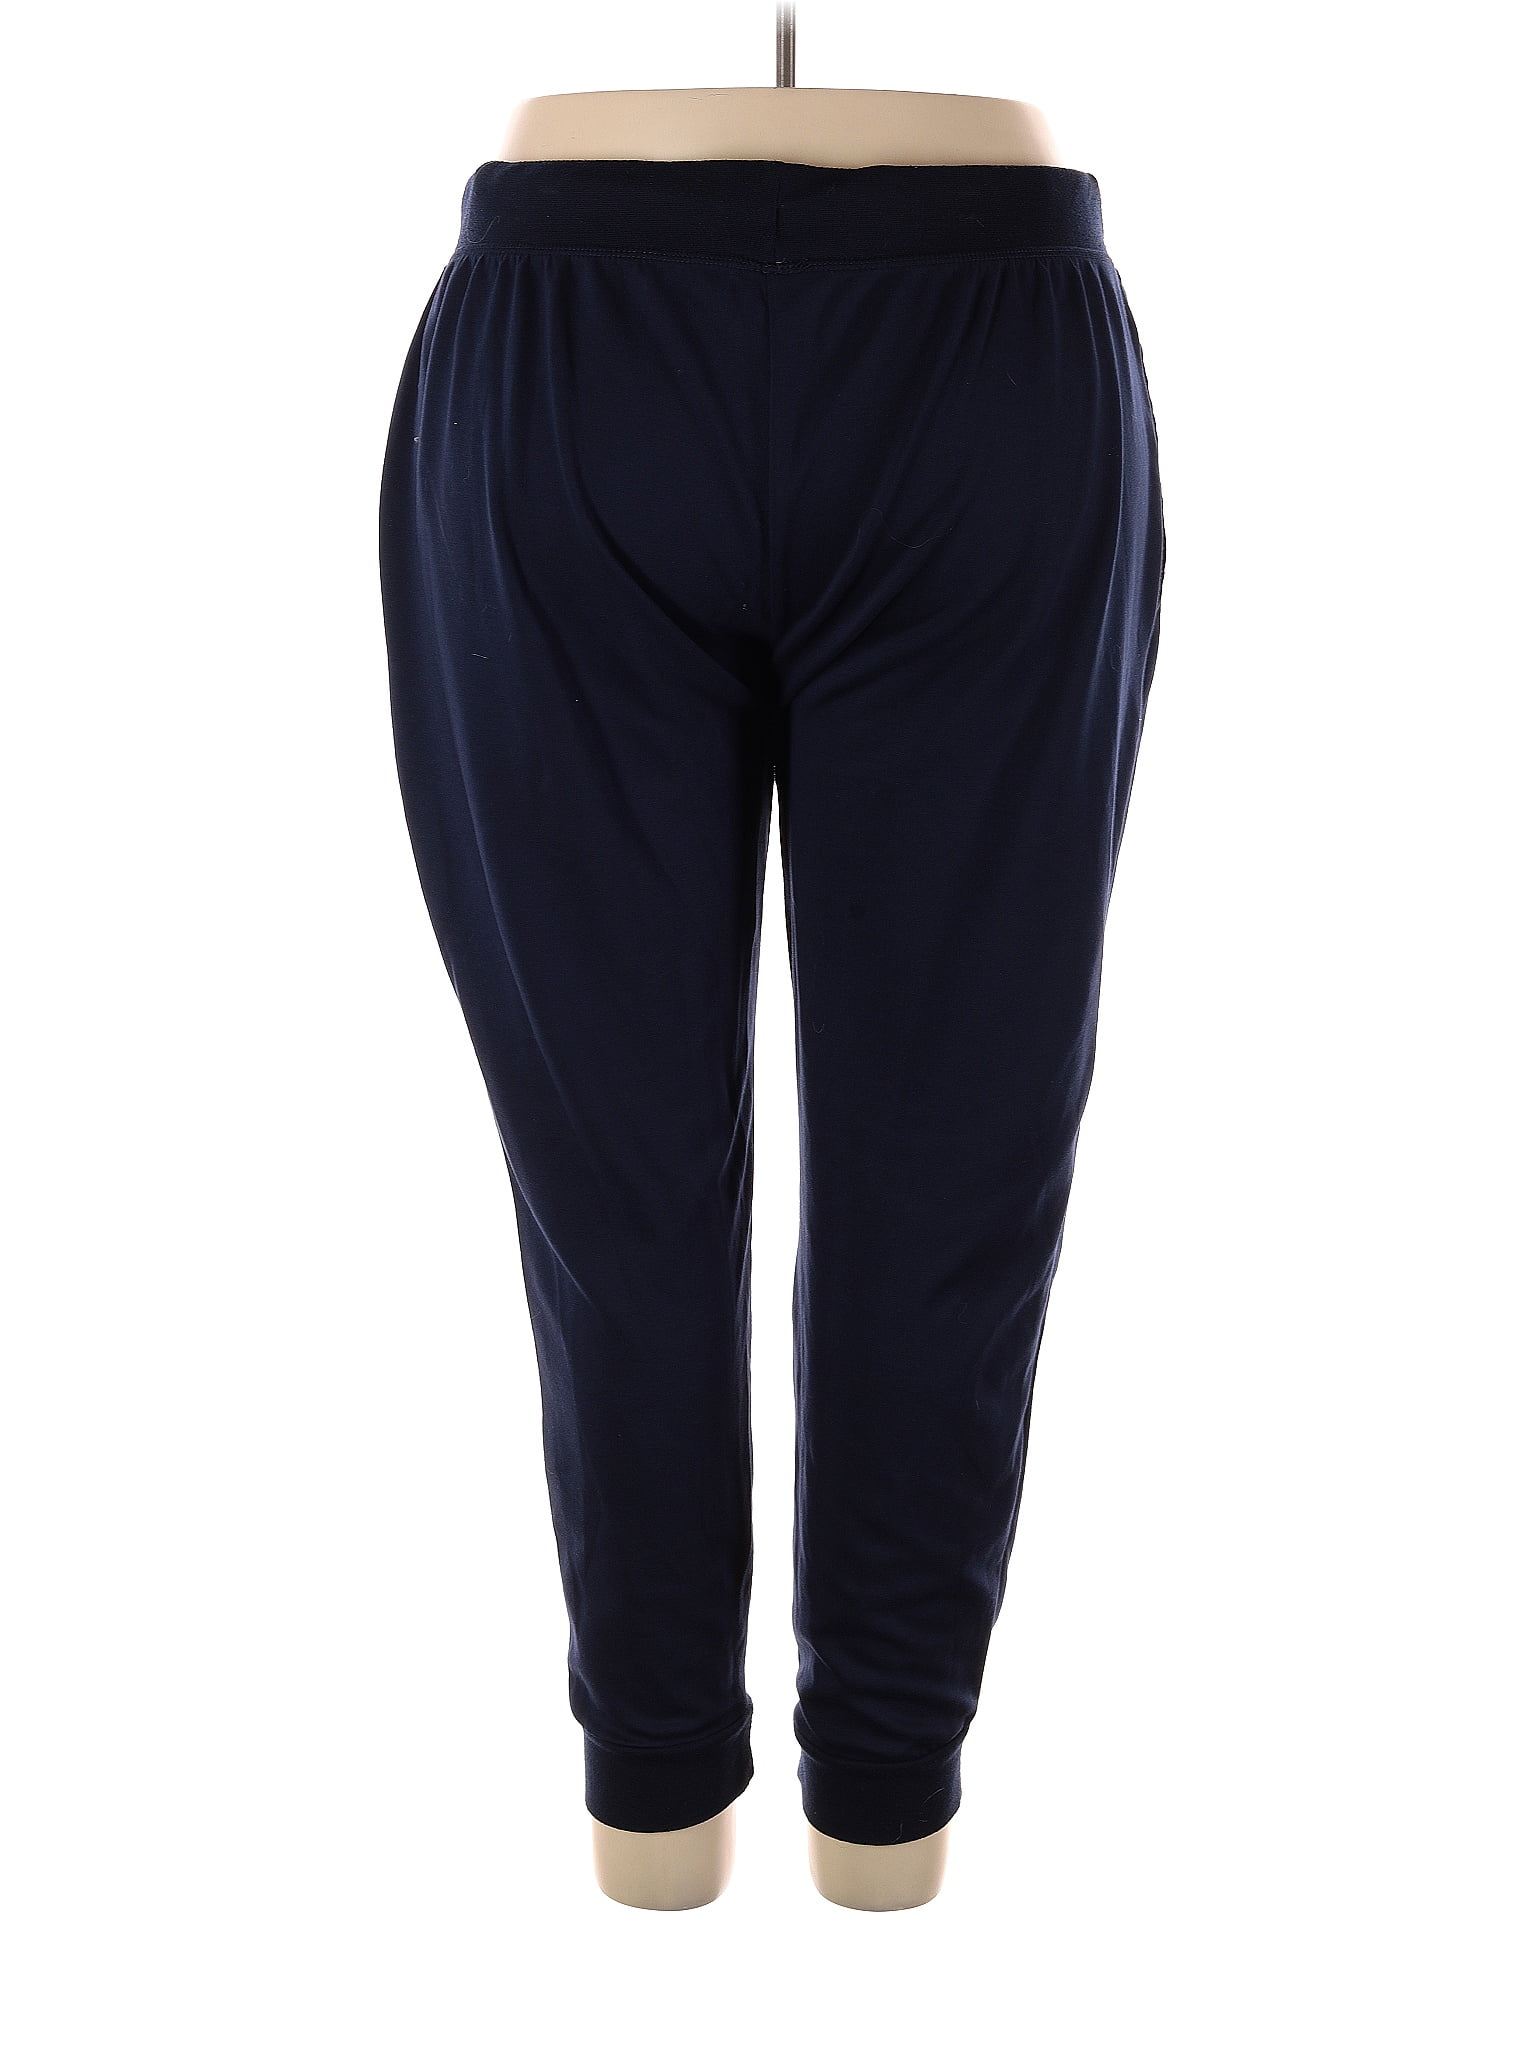 George Solid Navy Blue Sweatpants Size 2X (Plus) - 26% off